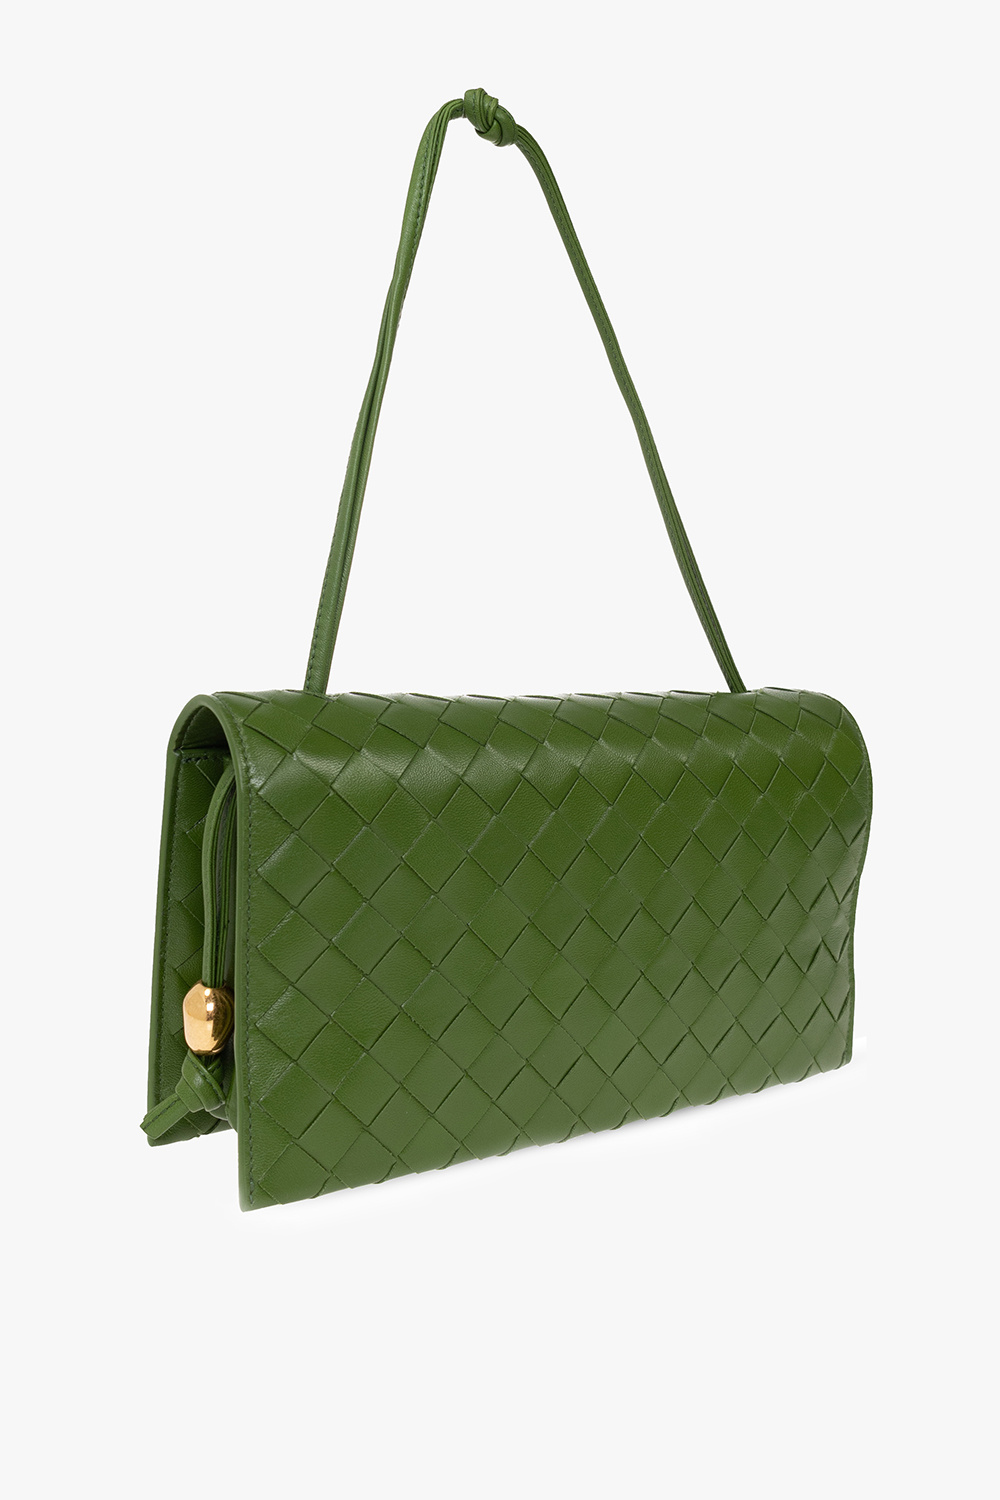 Bottega Veneta ‘Trio Small’ shearling bag